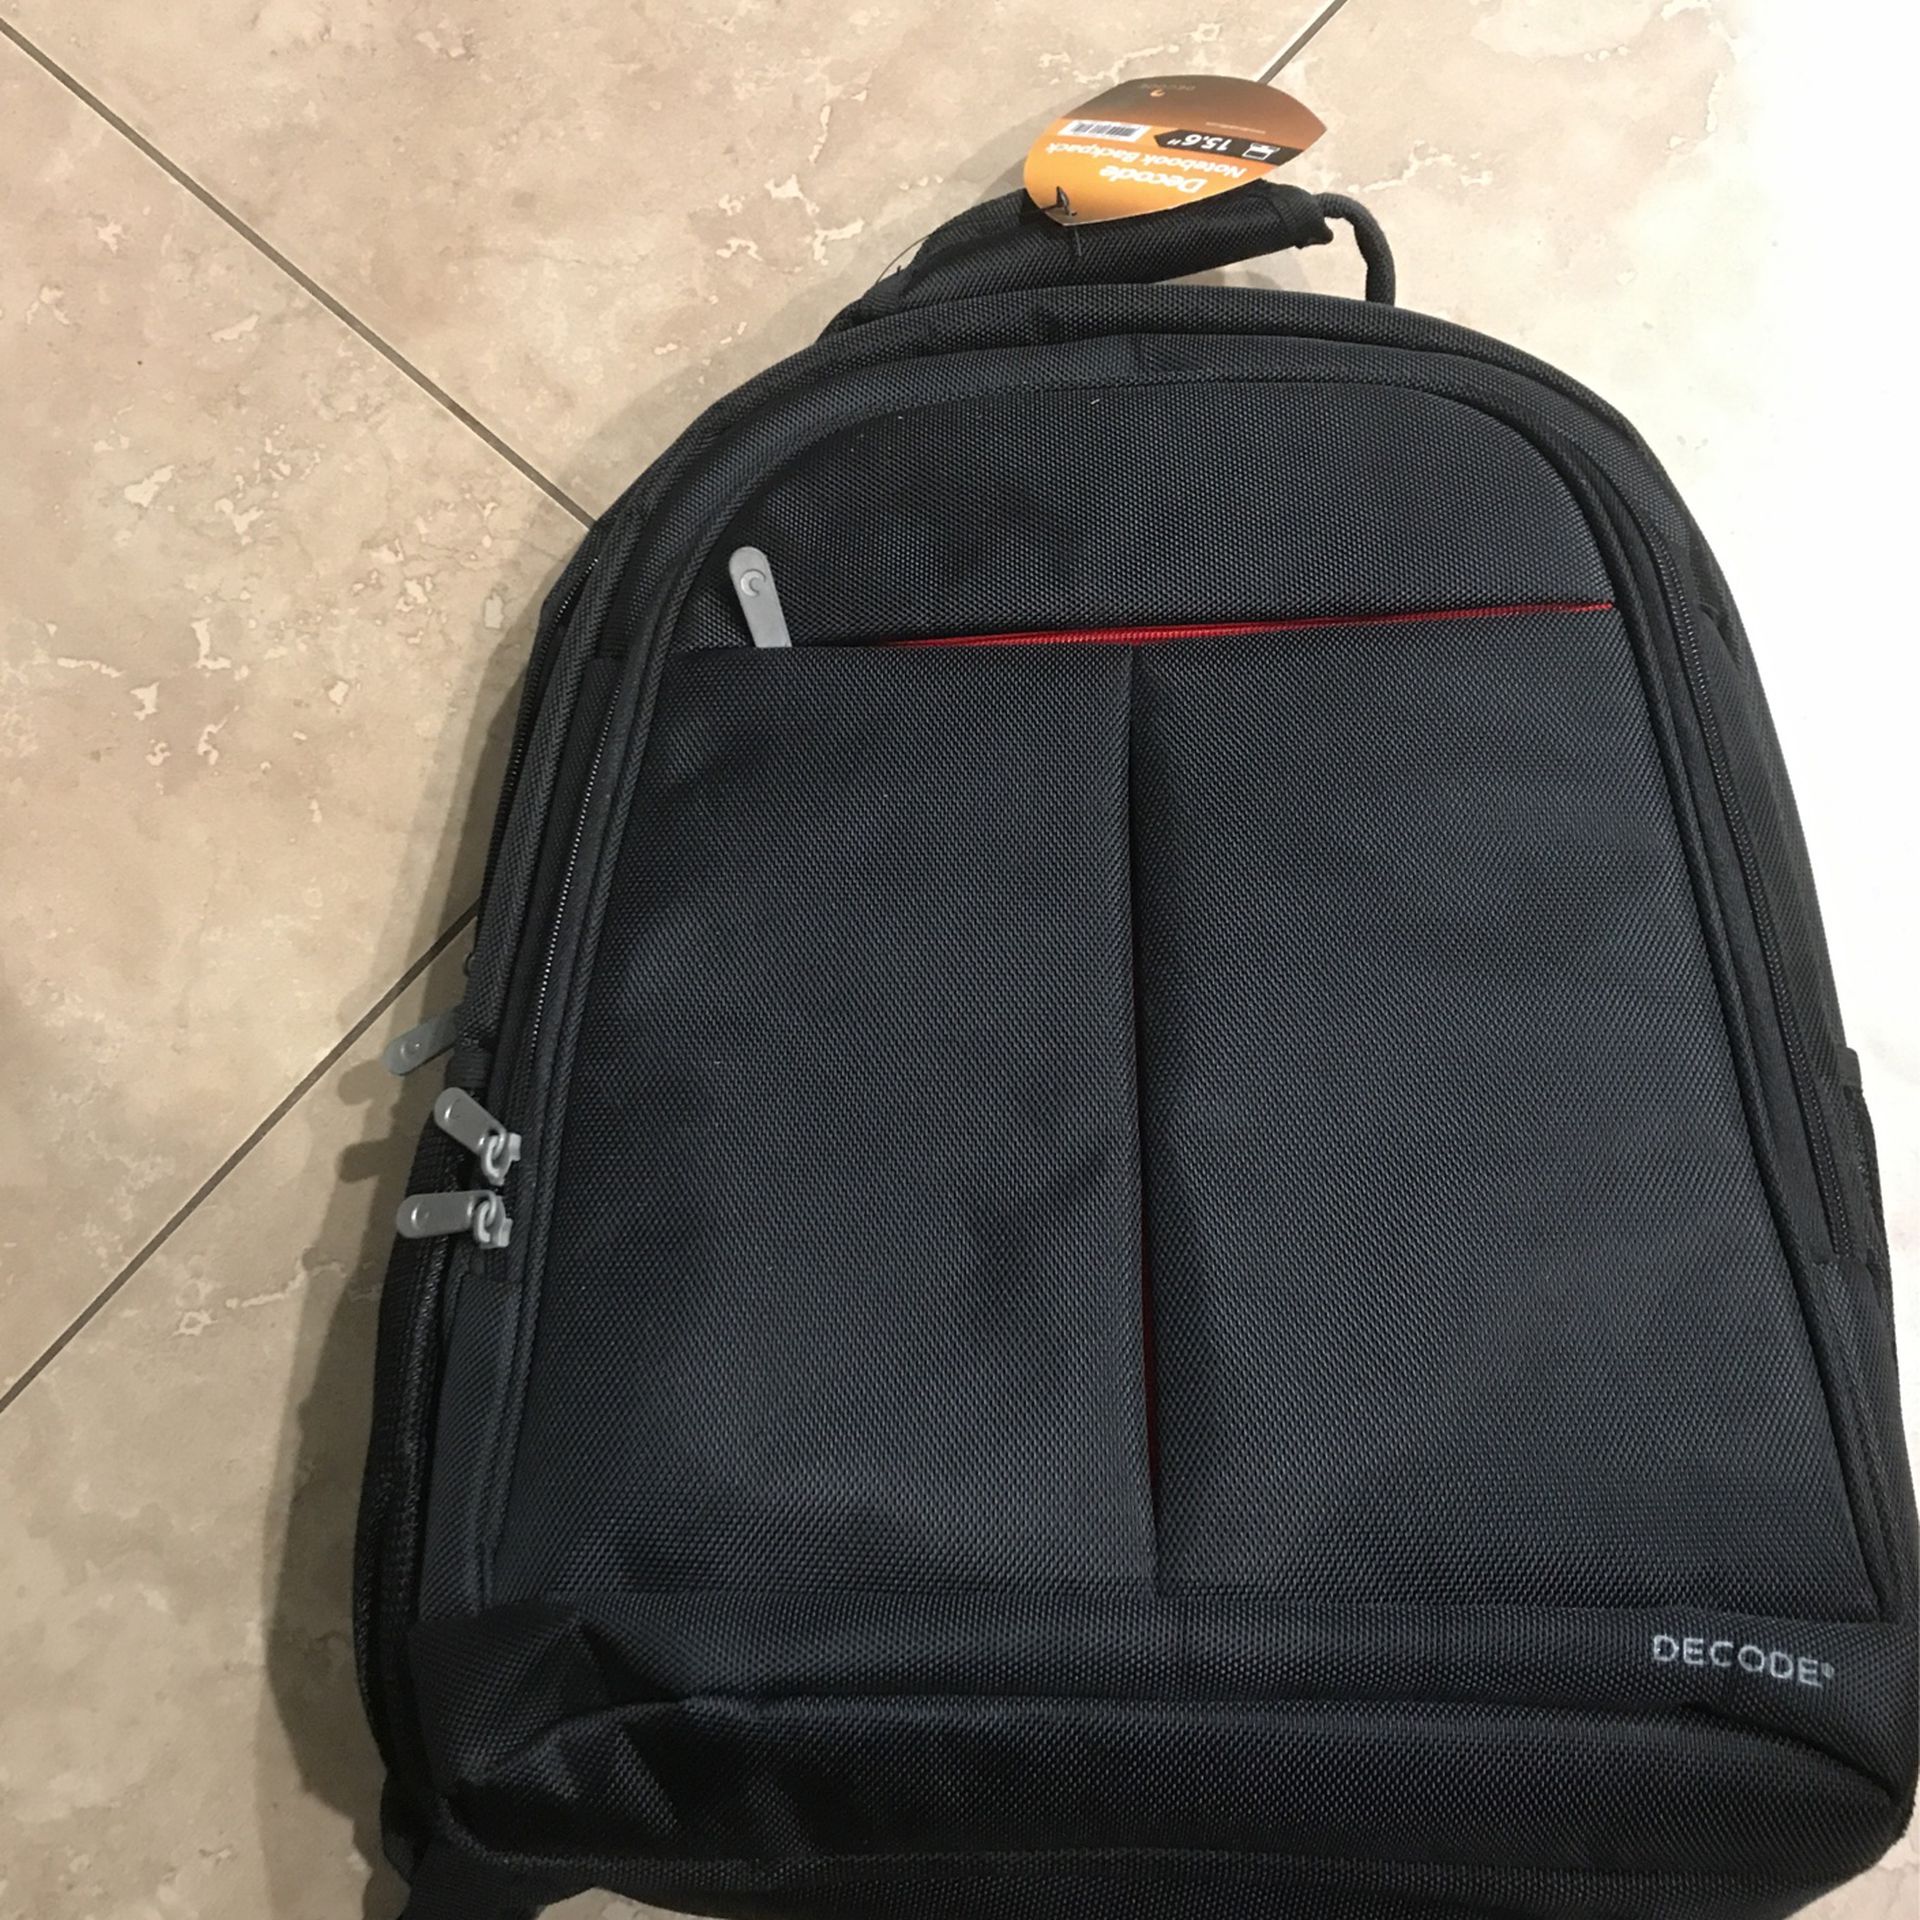 Decode Notebook Backpack 